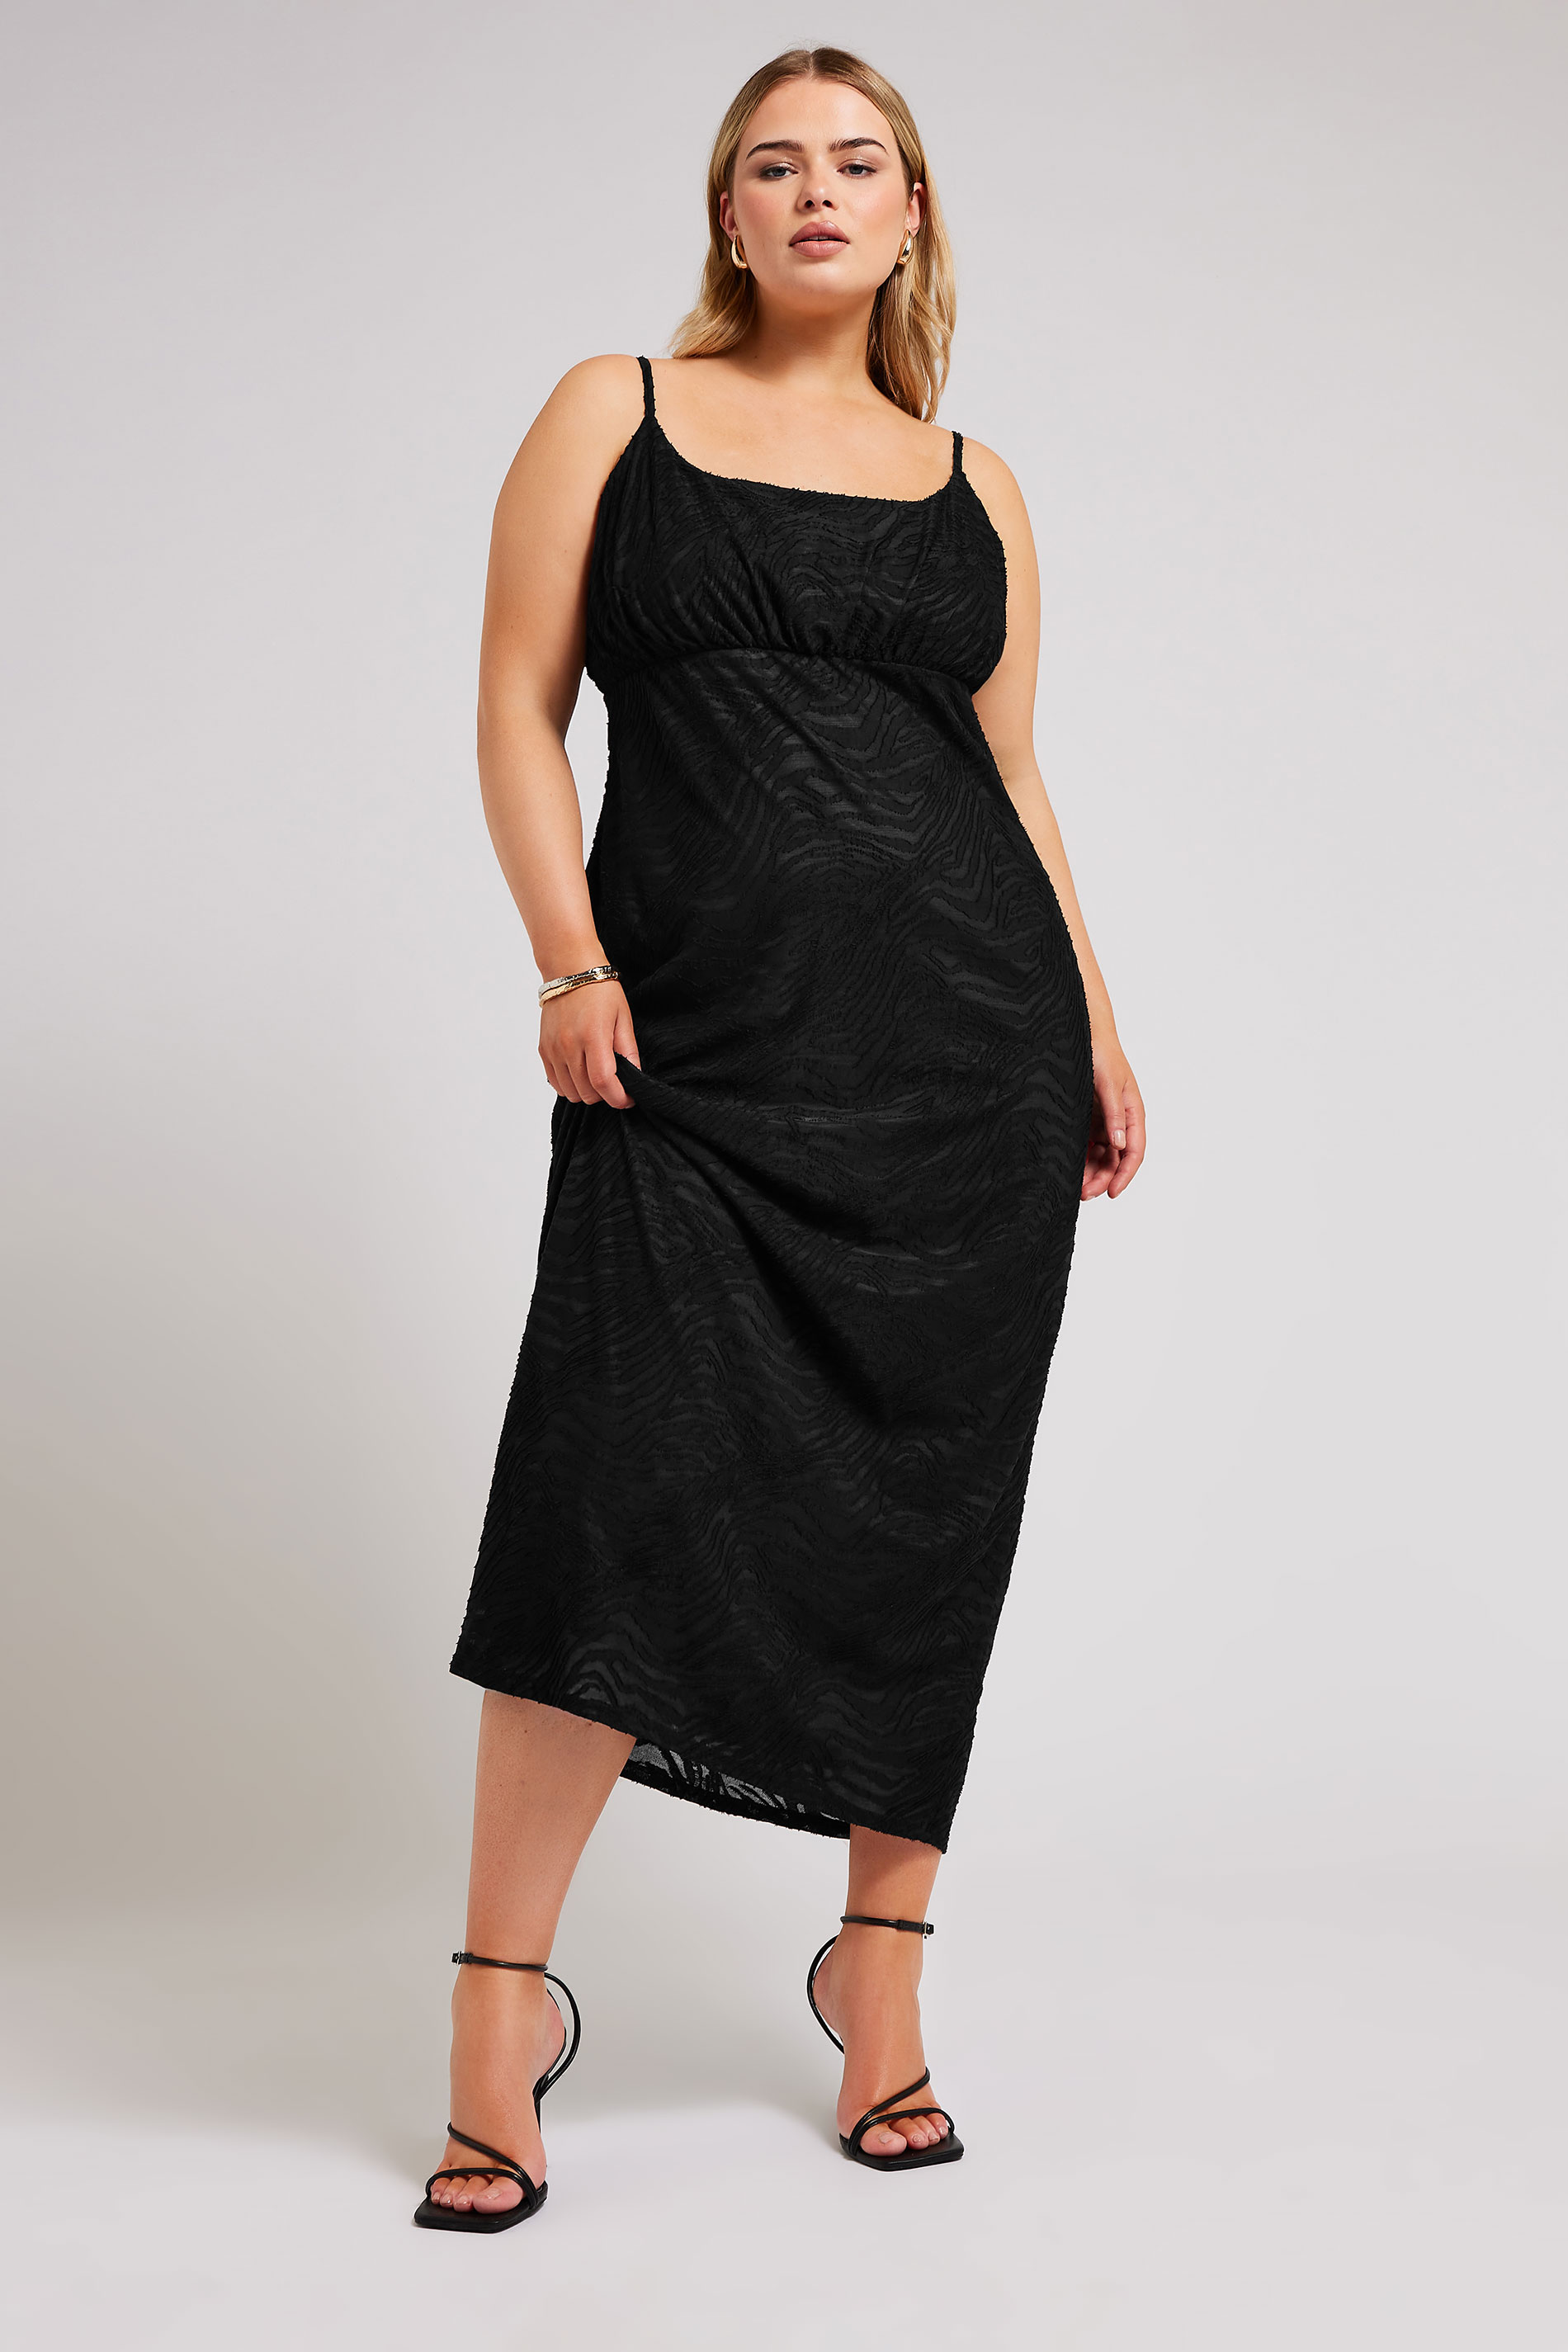 YOURS LONDON Plus Size Black Zebra Jacquard Maxi Dress | Yours Clothing 1